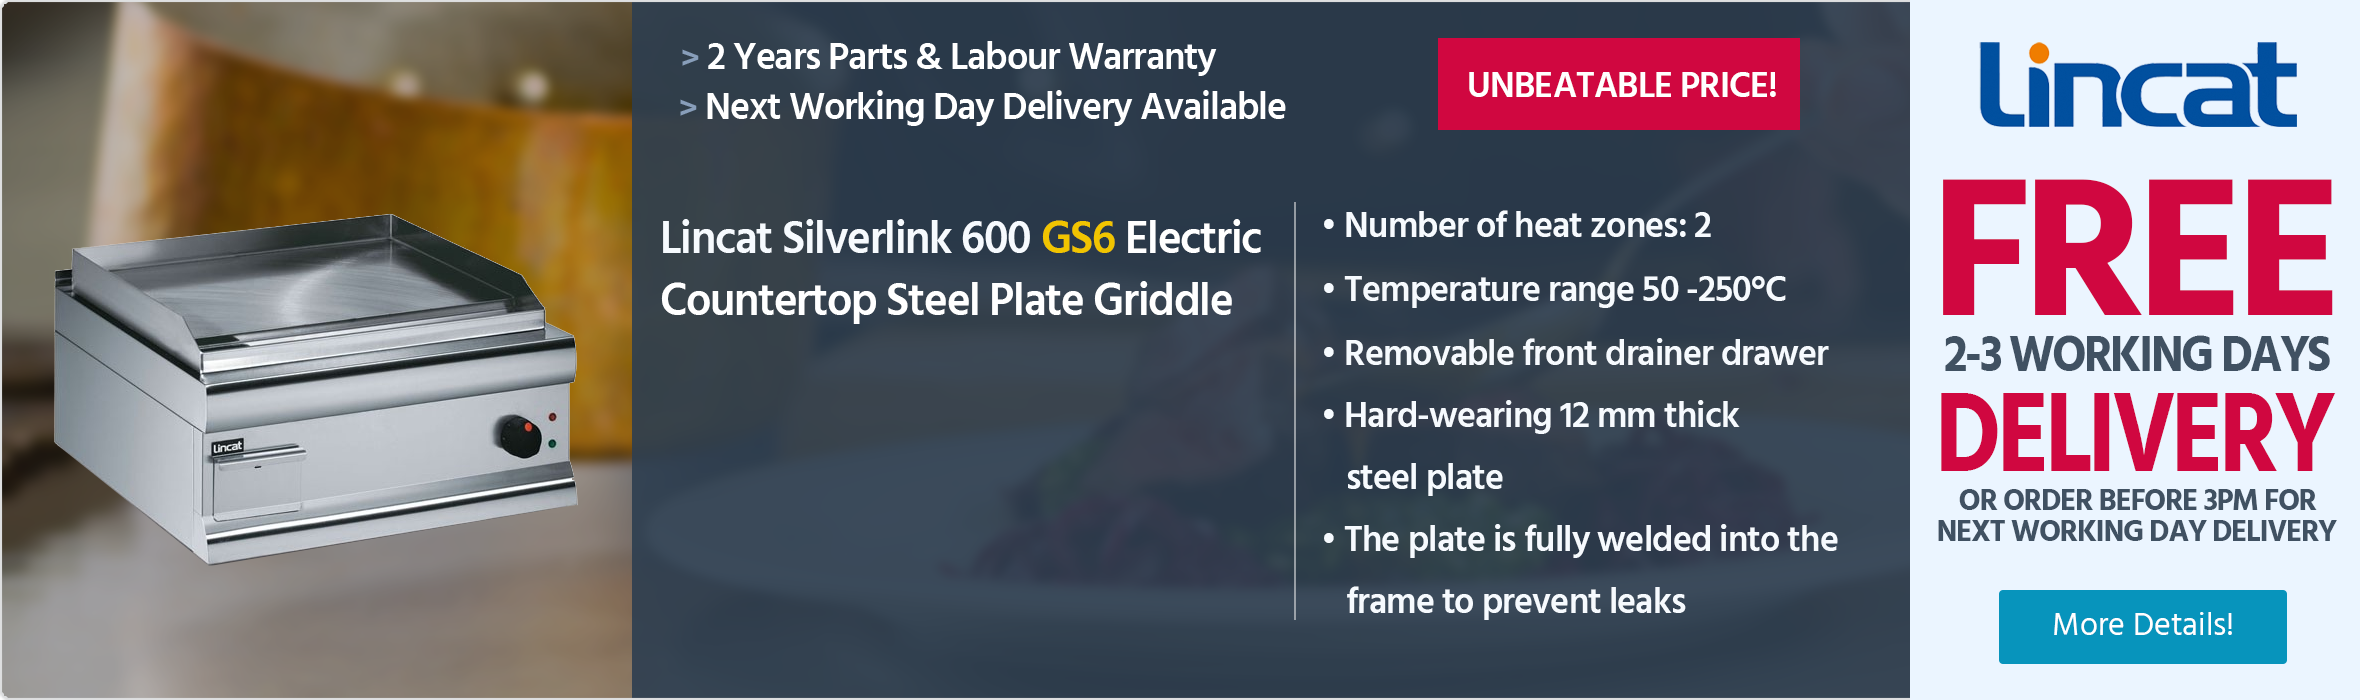 Lincat Silverlink 600 GS6 Electric Countertop Steel Plate Griddle